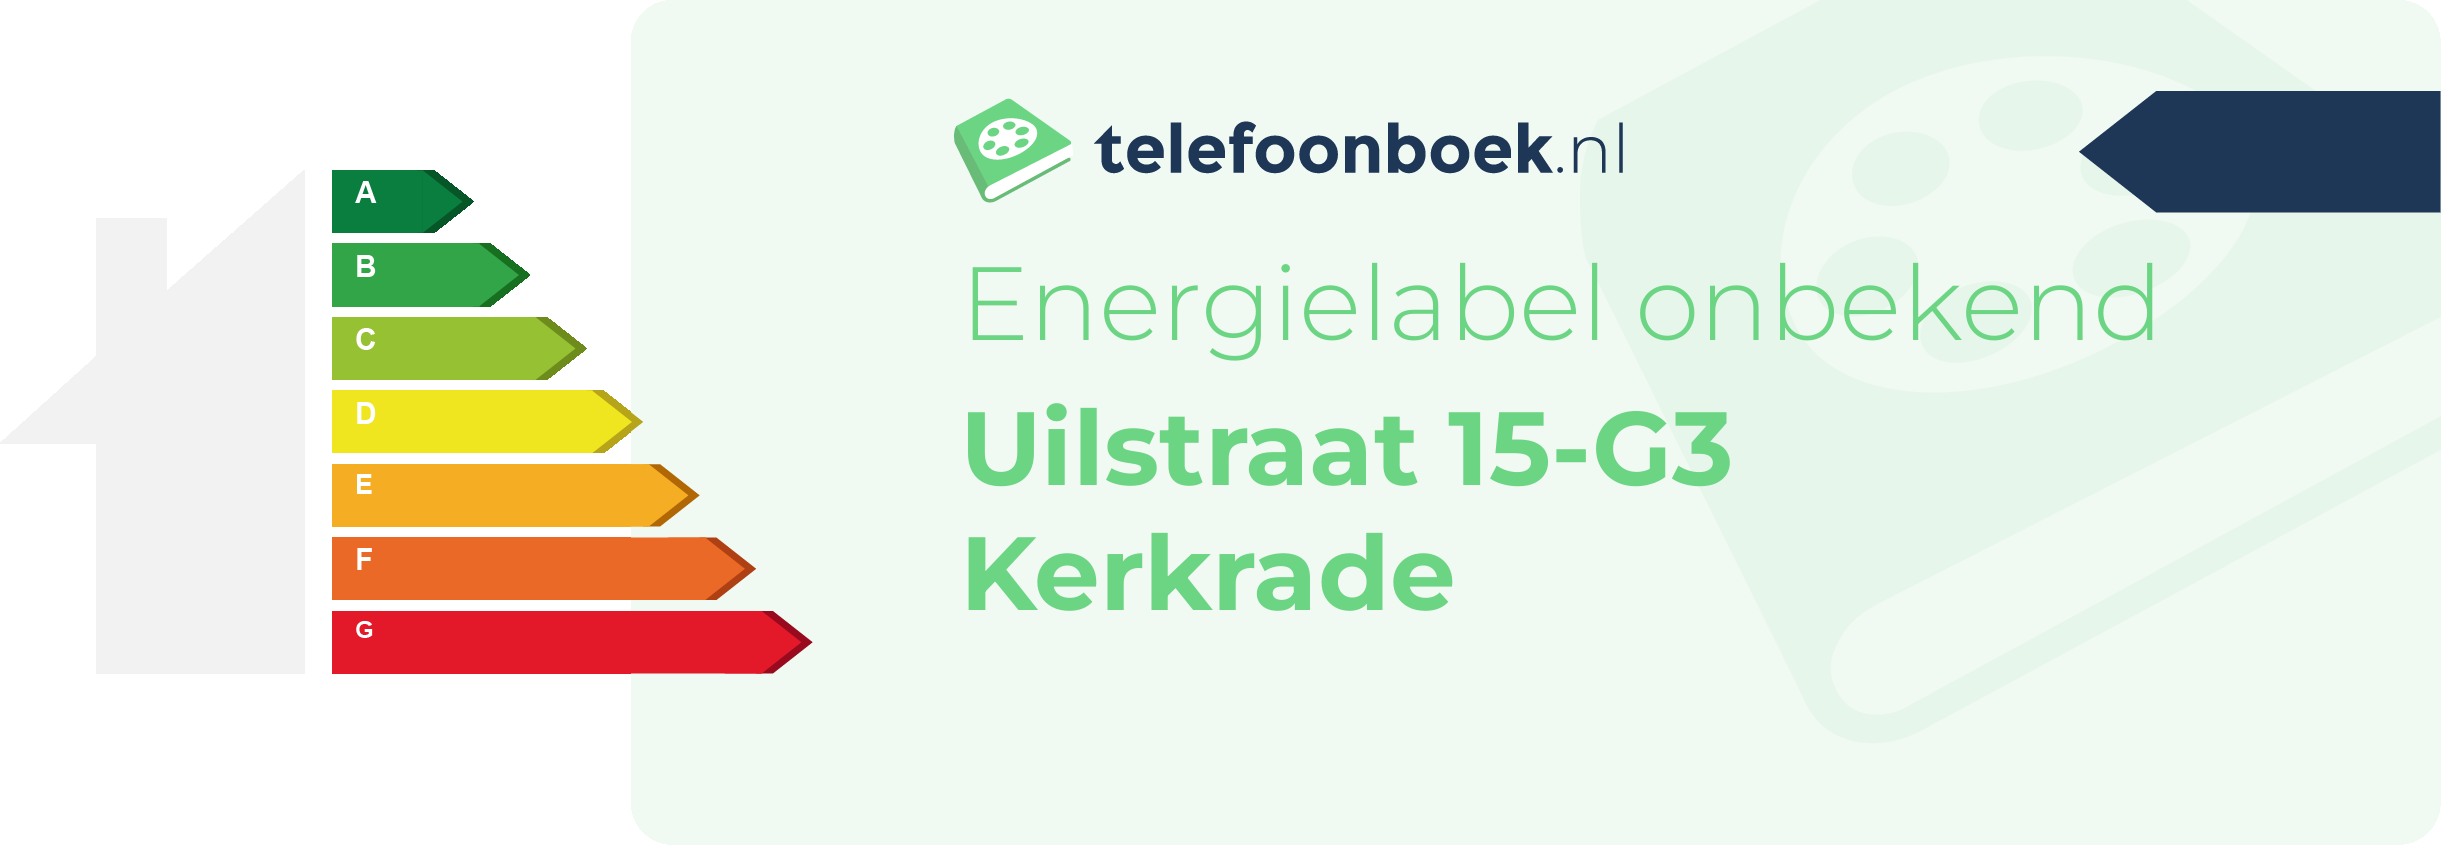 Energielabel Uilstraat 15-G3 Kerkrade